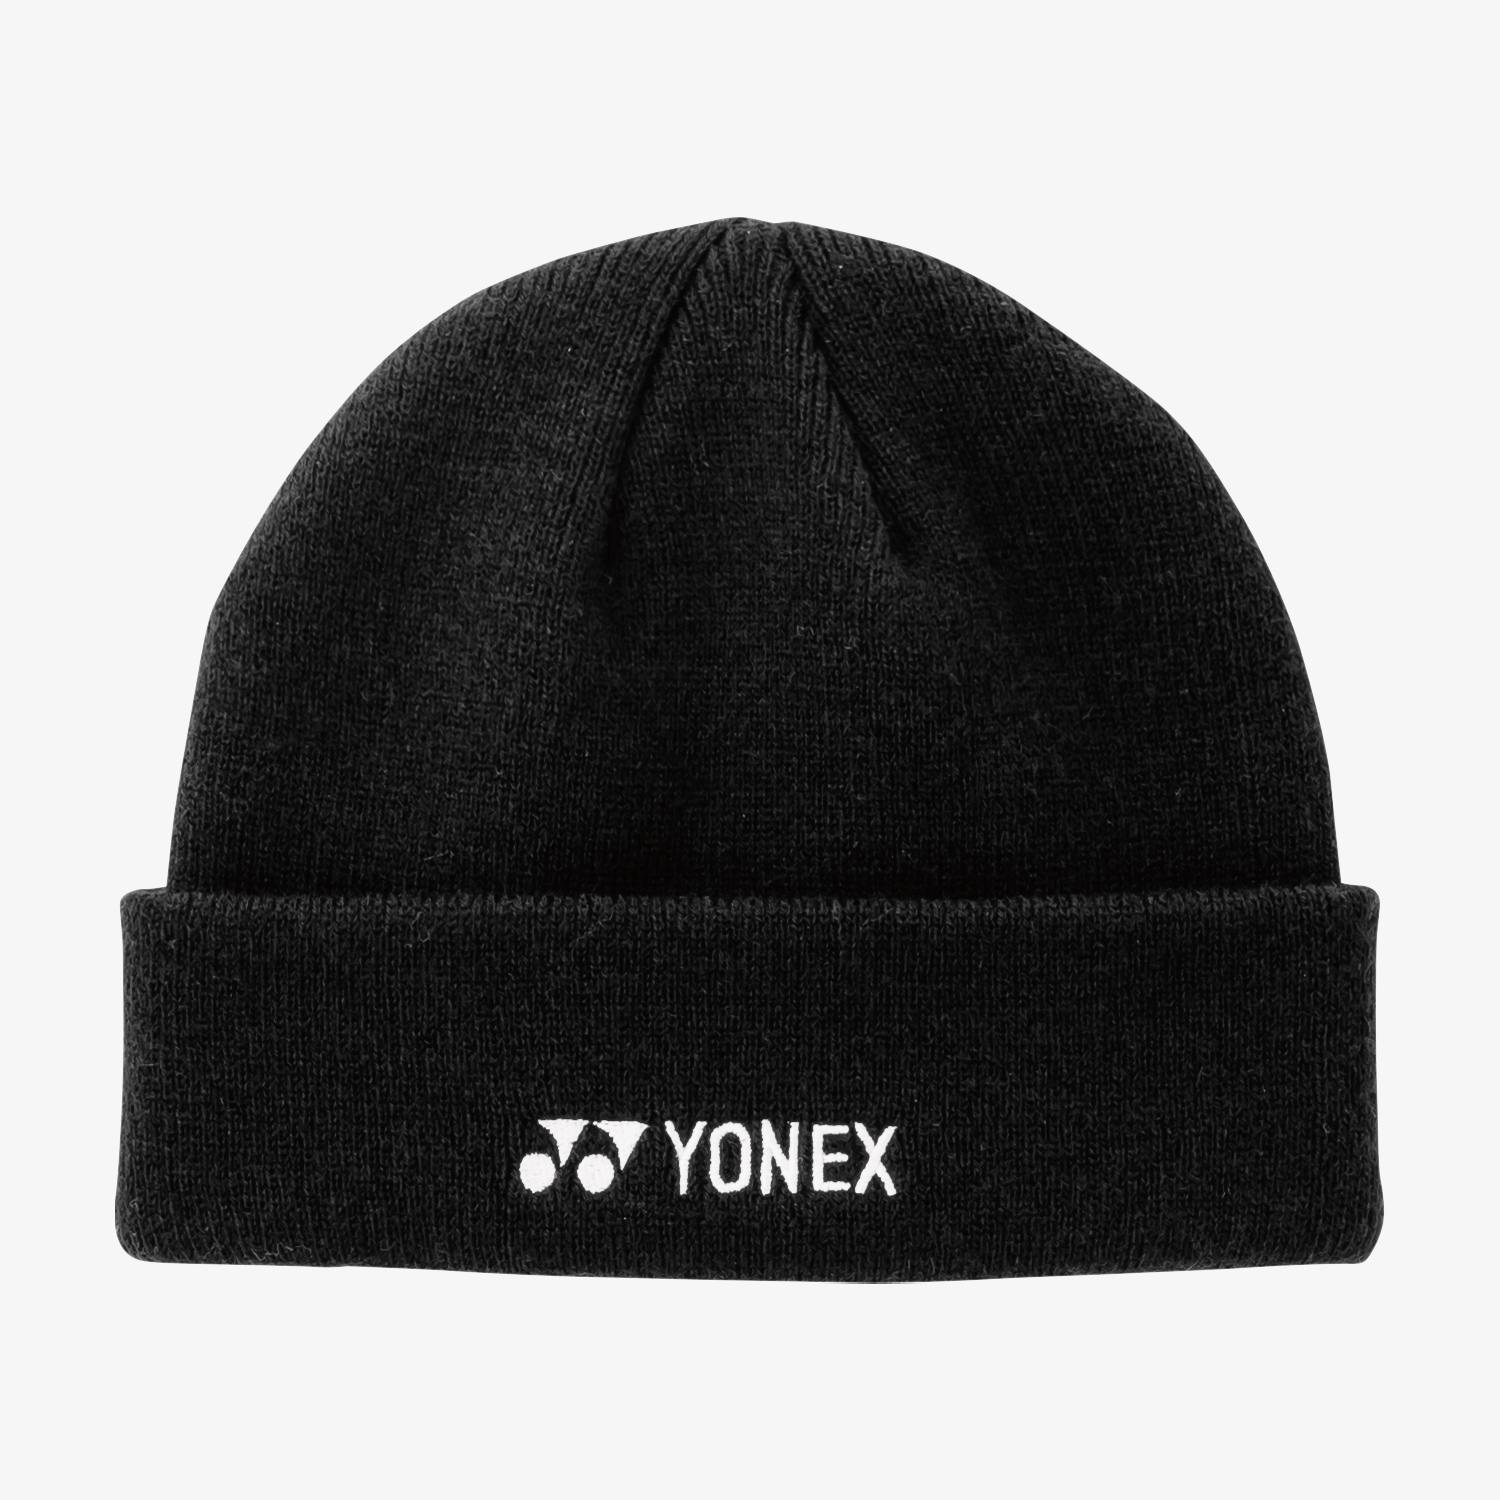 Yonex Beanie (Black)